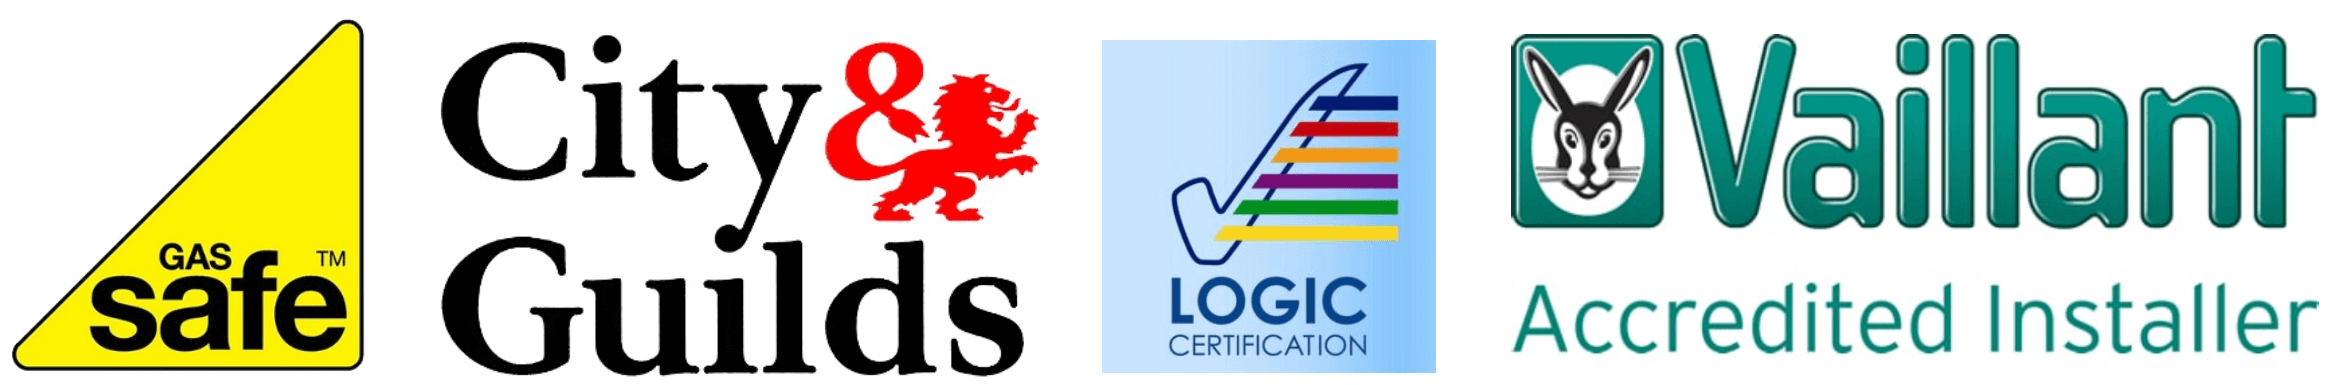 company qualifications accreditation logos